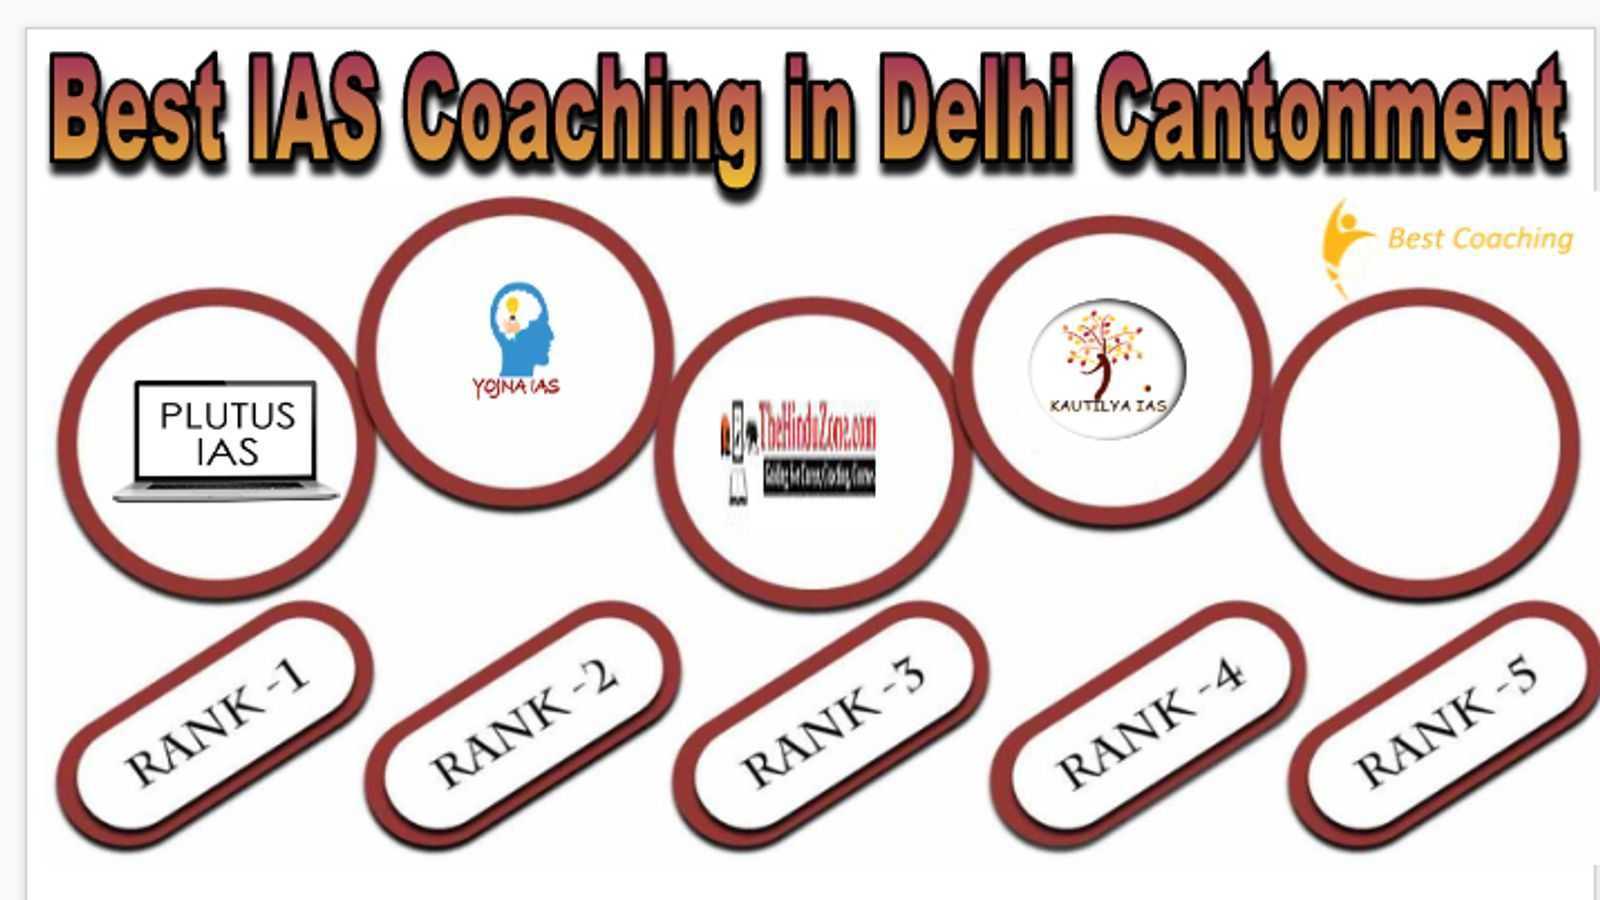 Best IAS Coaching in Delhi Cantonment